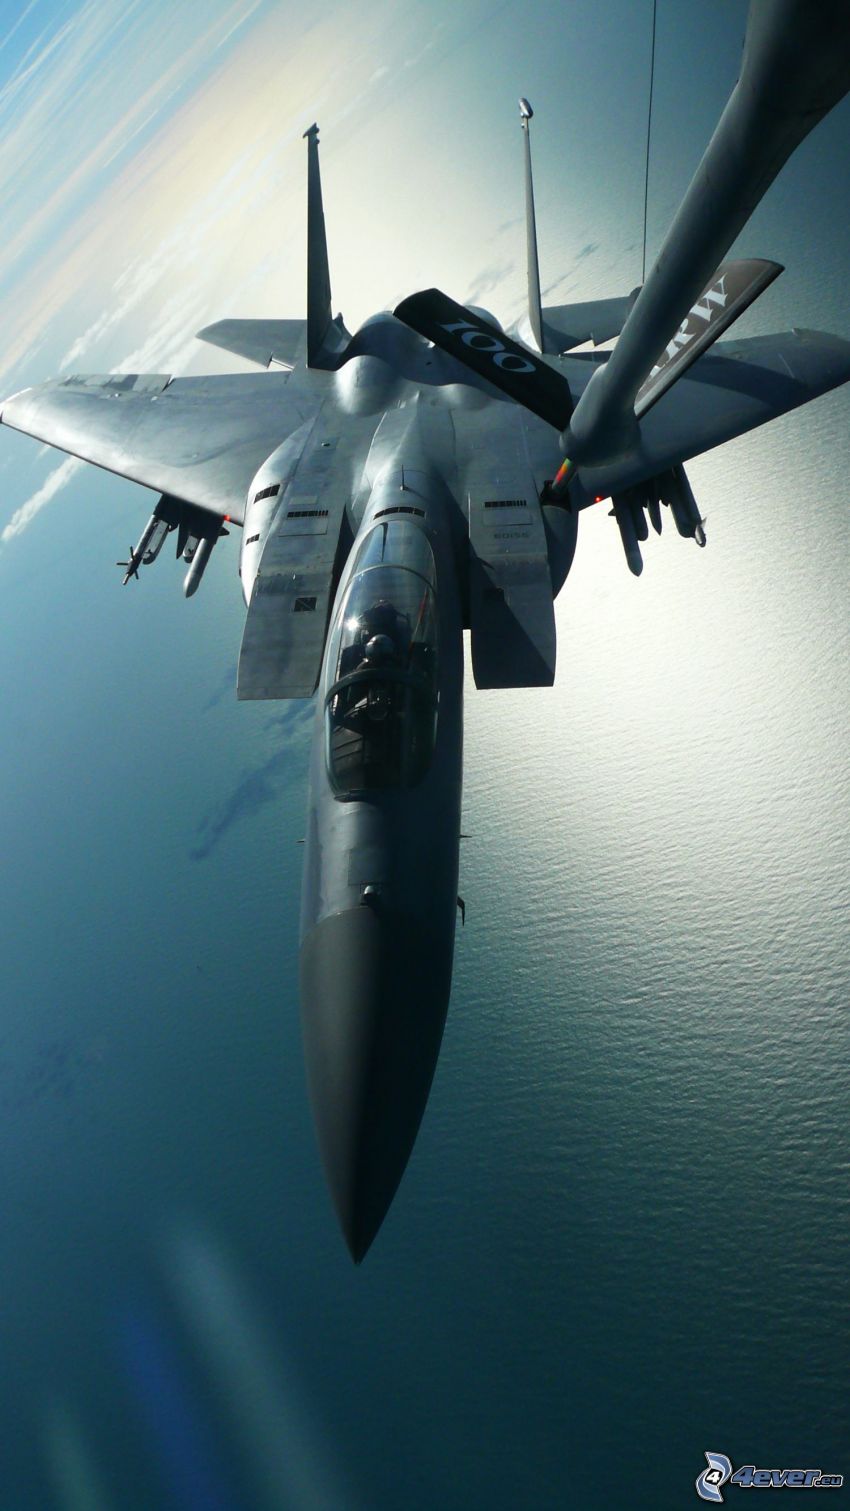 F-15 Eagle, aerial refueling